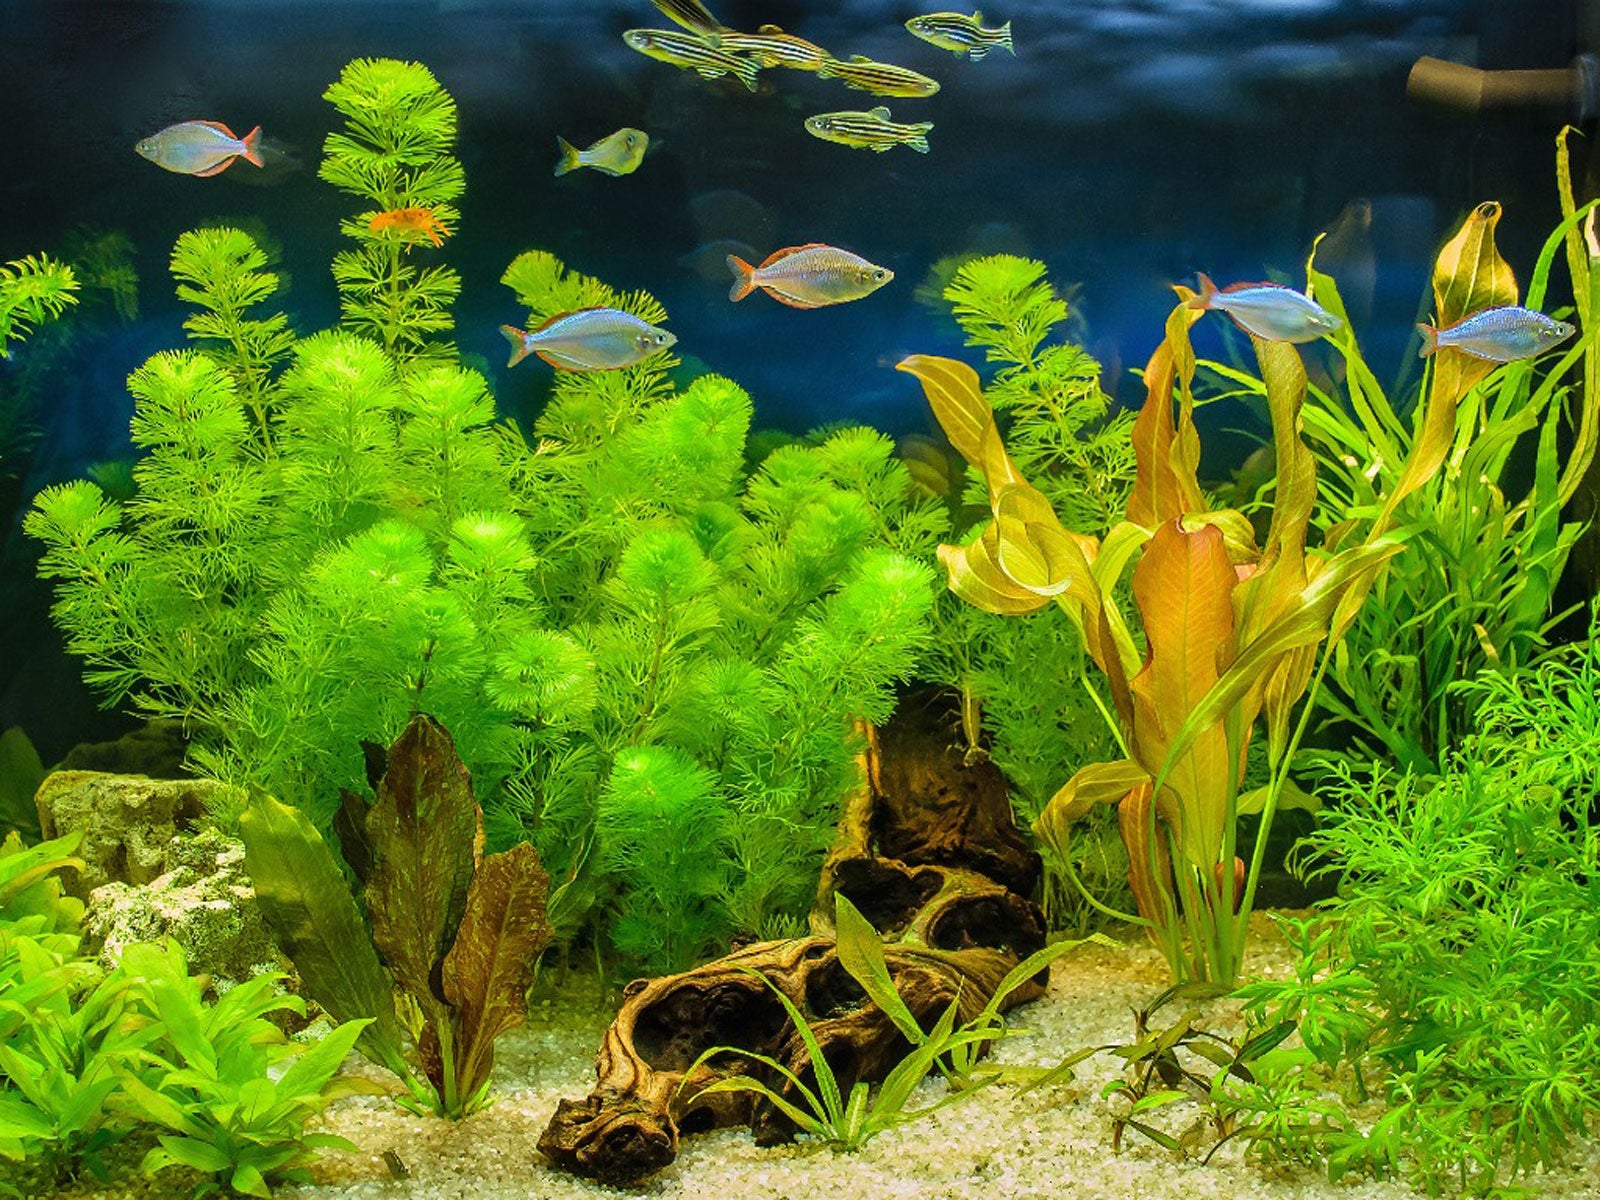 Growing Aquarium Plants How To Grow